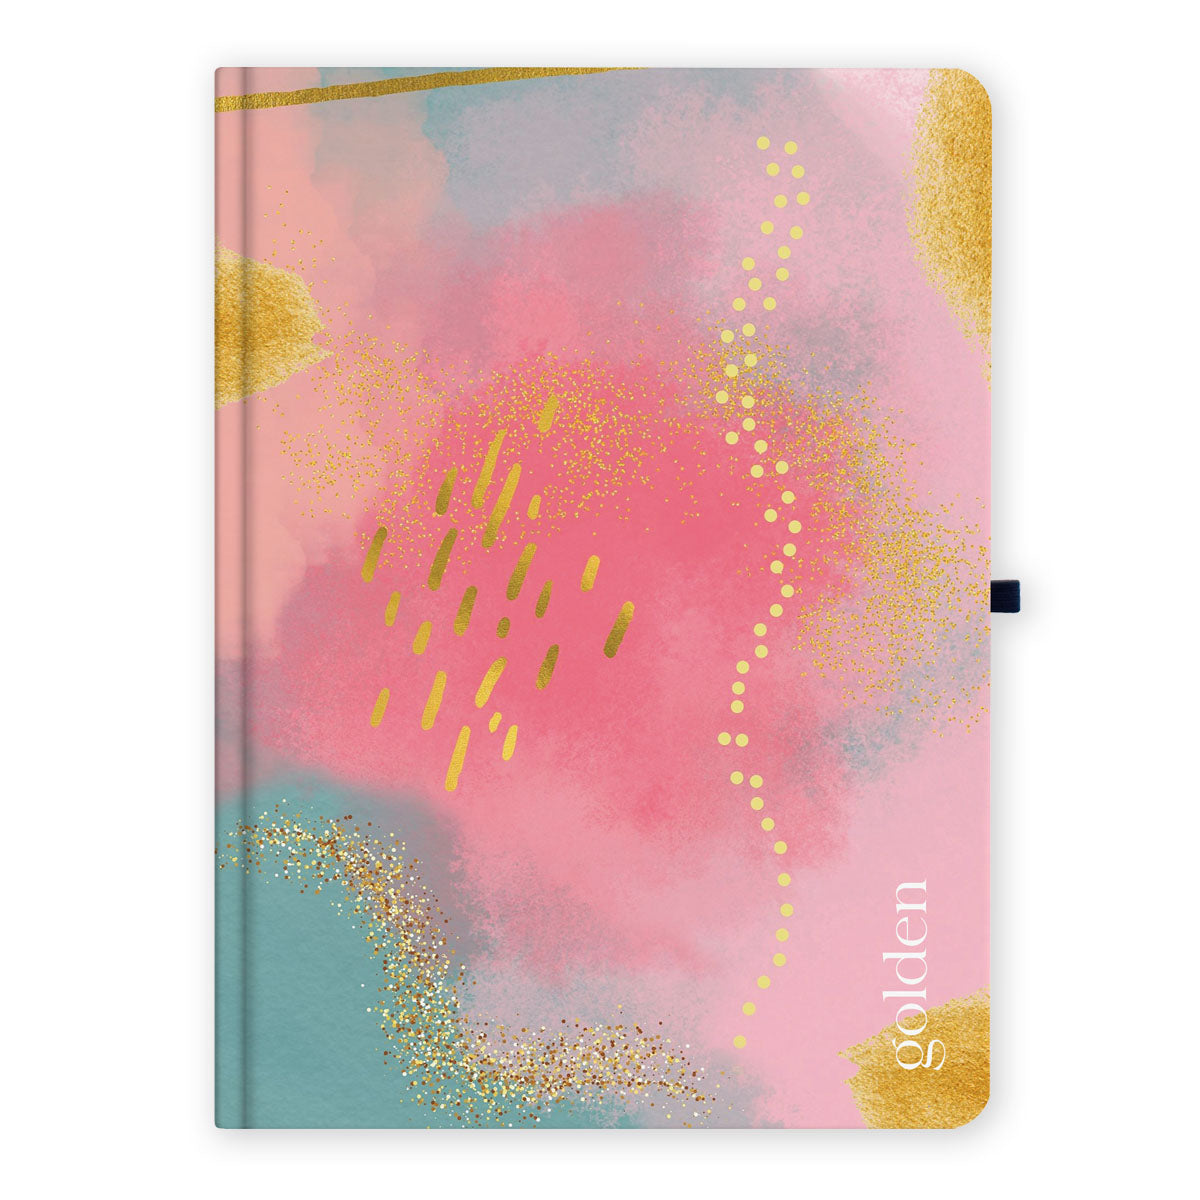 Ženski rokovnik 2023, naslovnica Golden, dizajn roza tirkizni sa zlatnim detaljima. Rokovnik sa datumima, dimenzija 16,3 cm x 11,7 cm